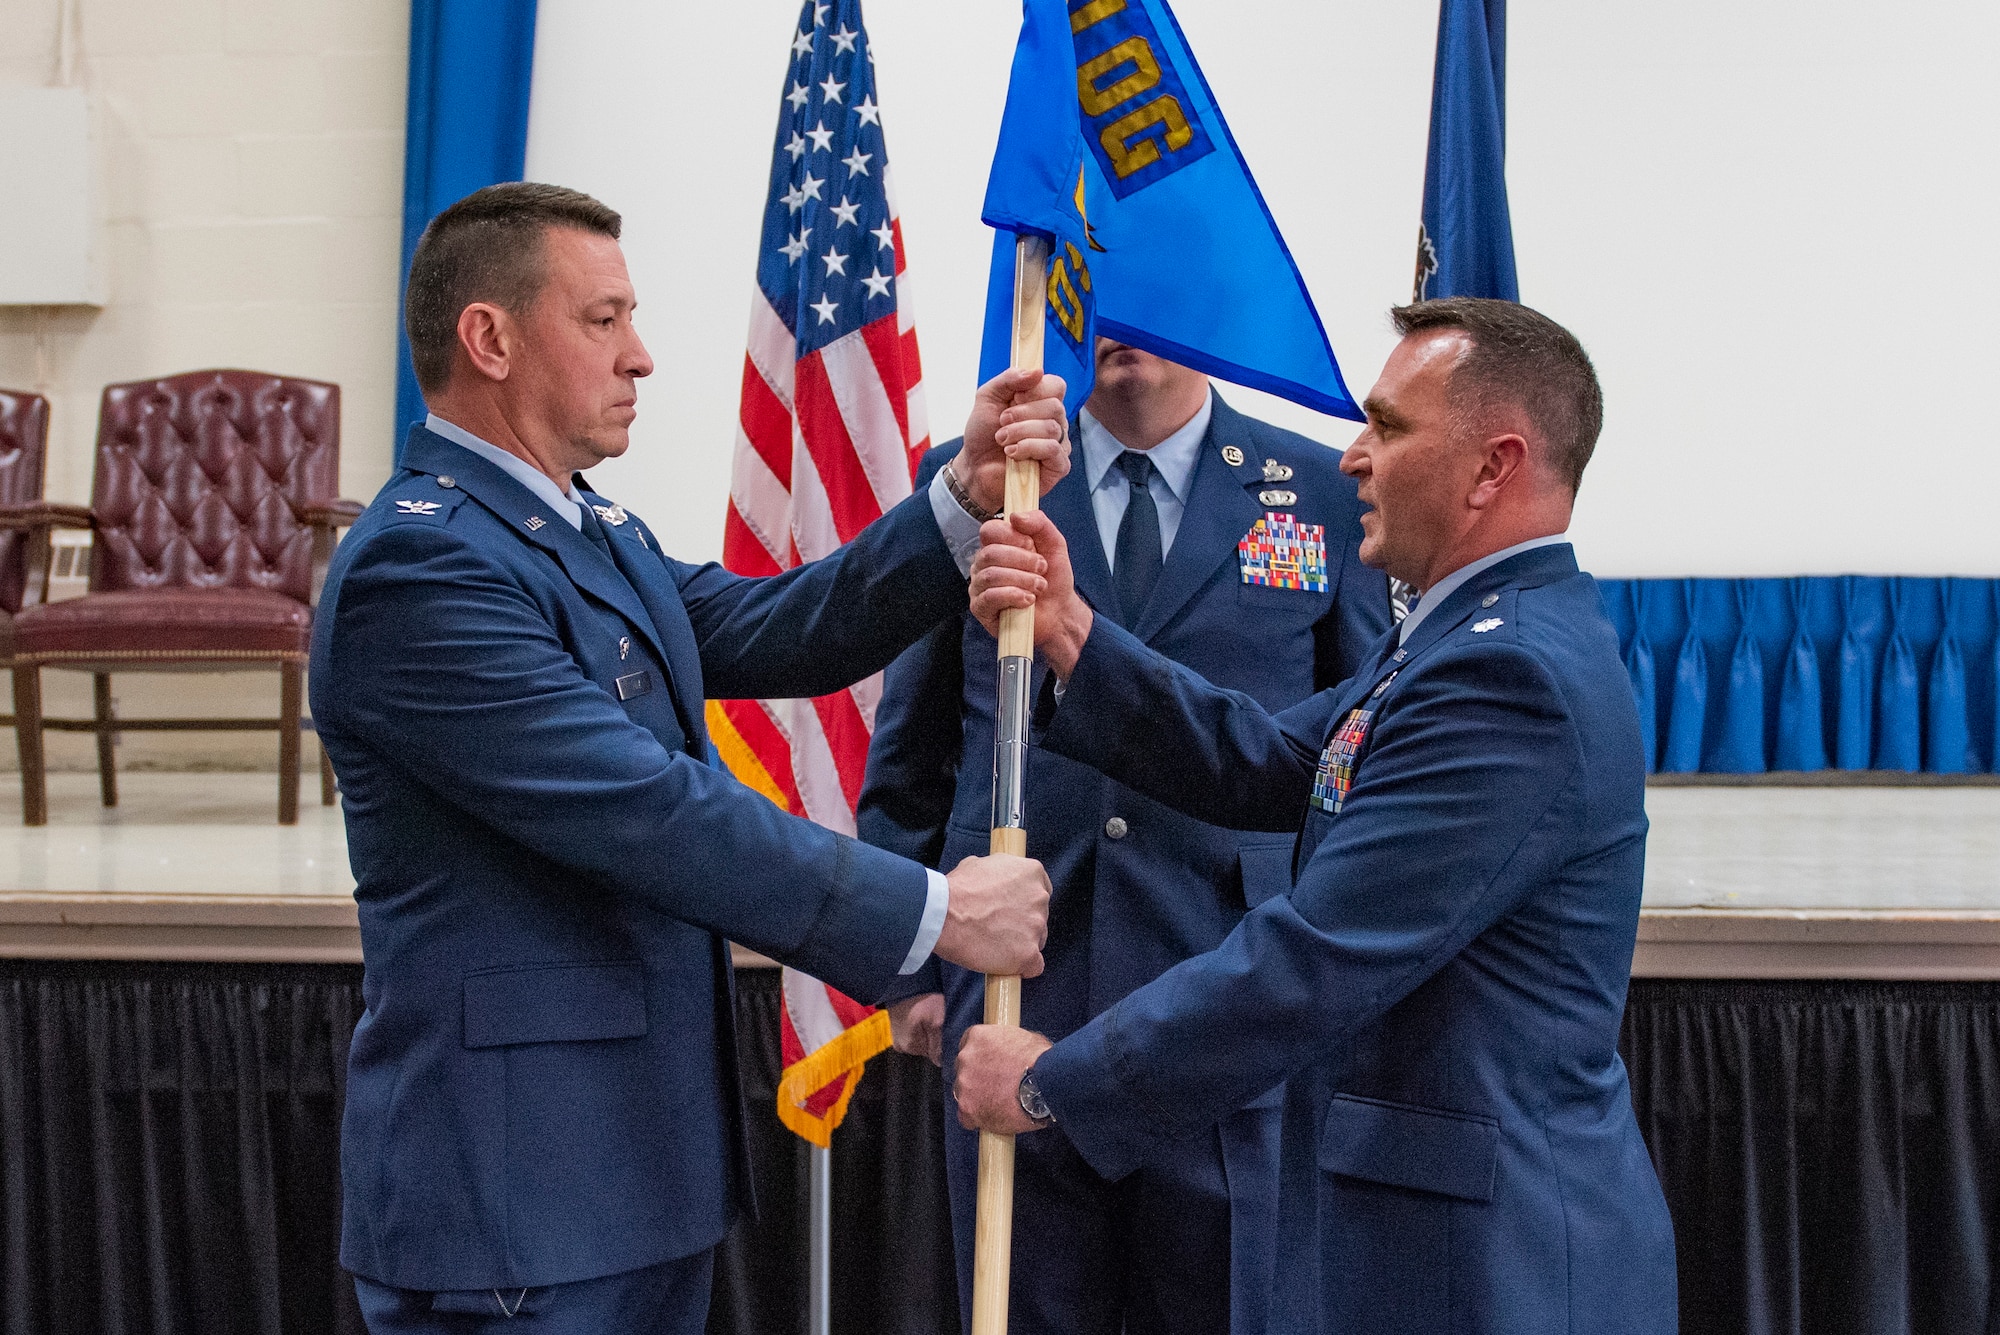 A man in Air Force dress blues takes a flag from another man in Air Force dress blues.